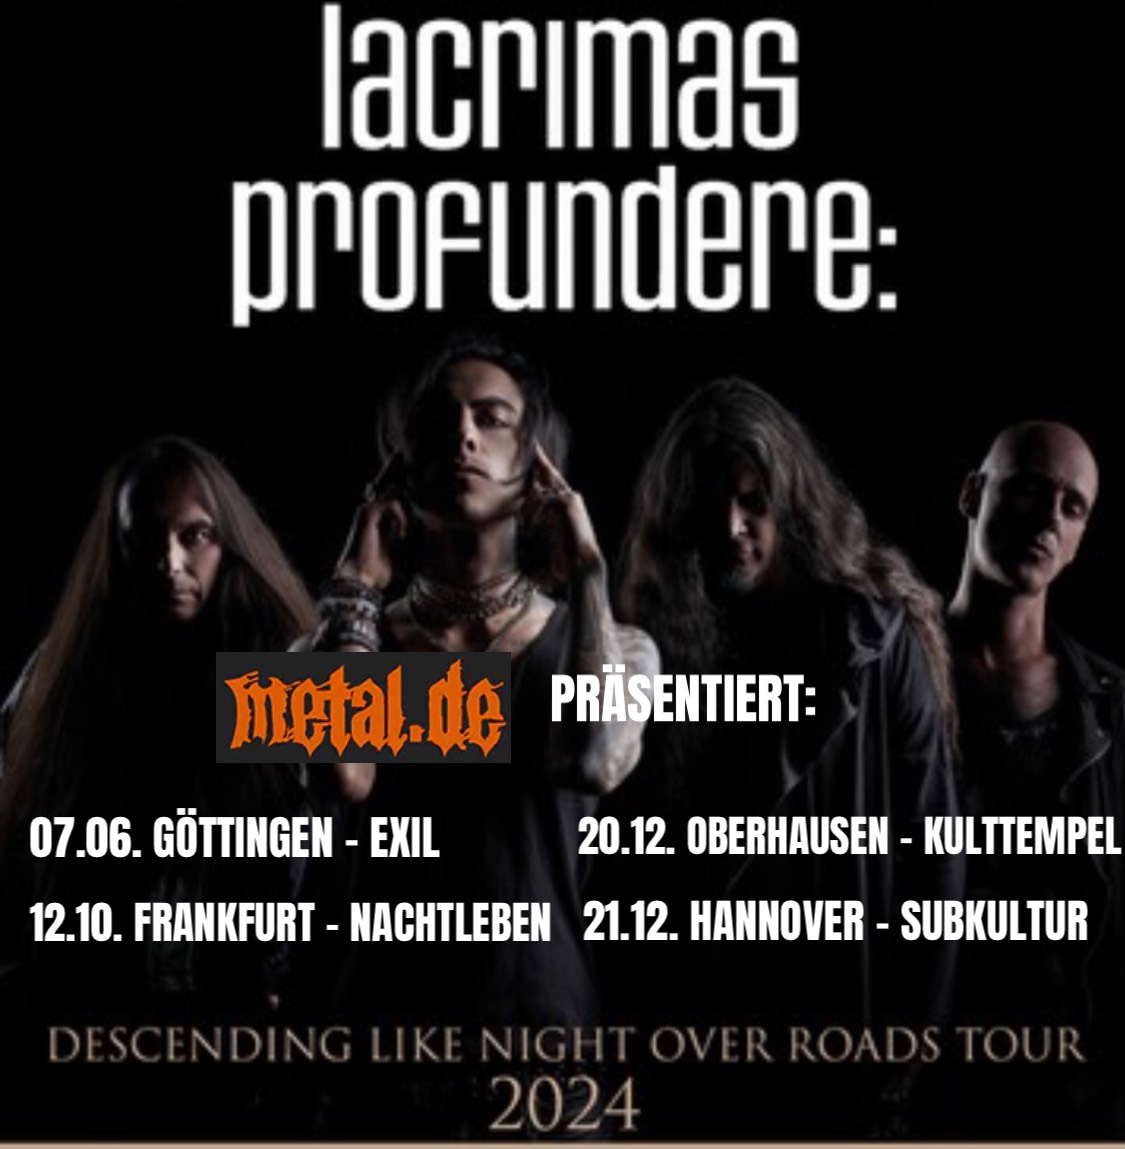 Lacrimas Profundere Tour 2024